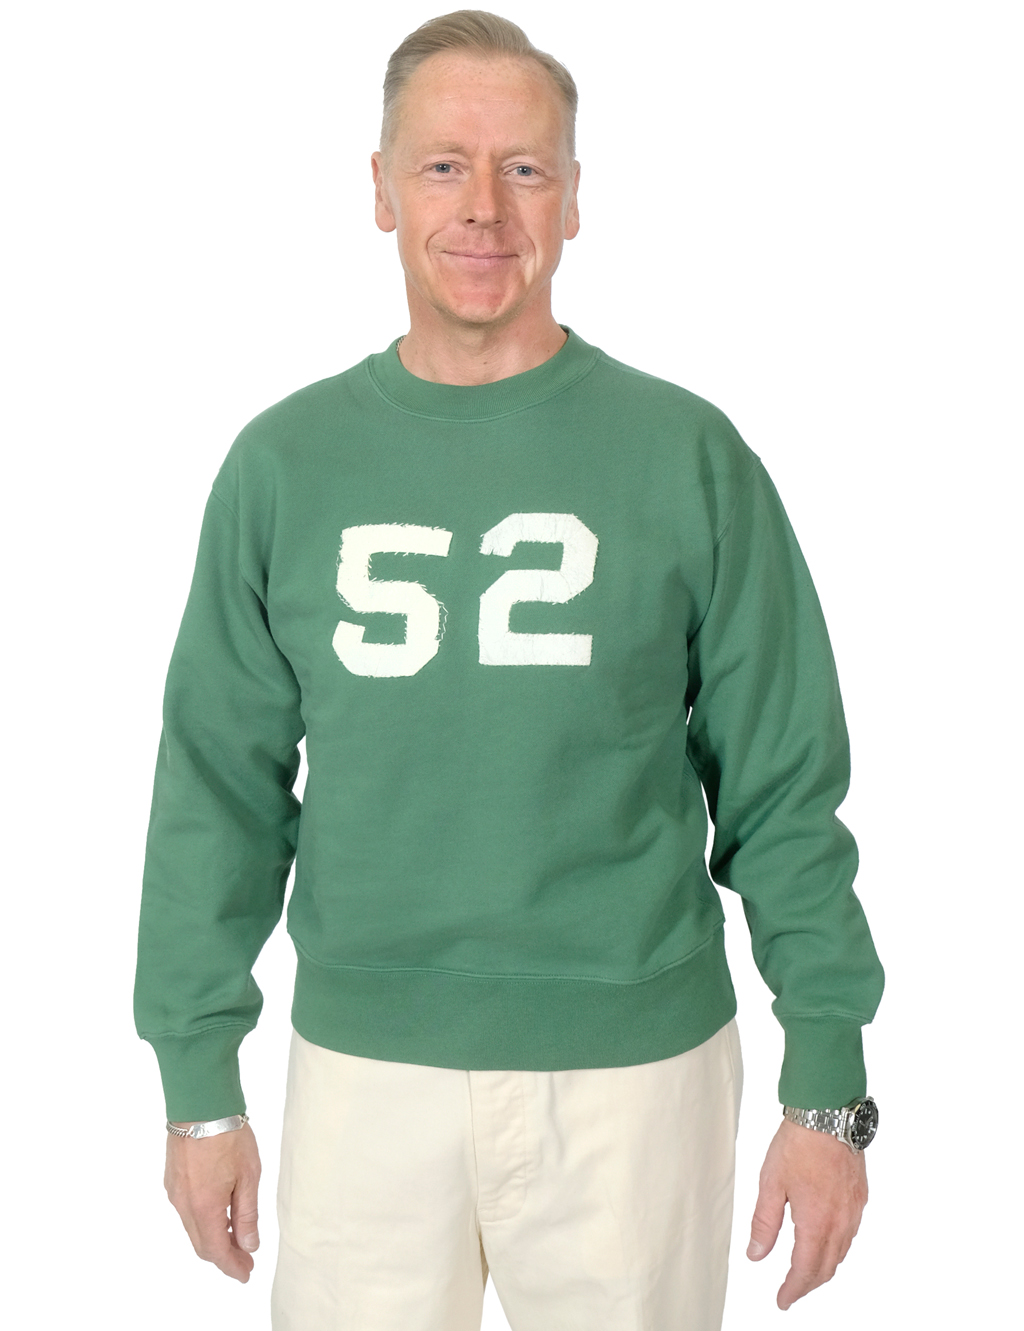 Levis Vintage Clothing - 60s Varsity Crew Sweatshirt - Fairway Green